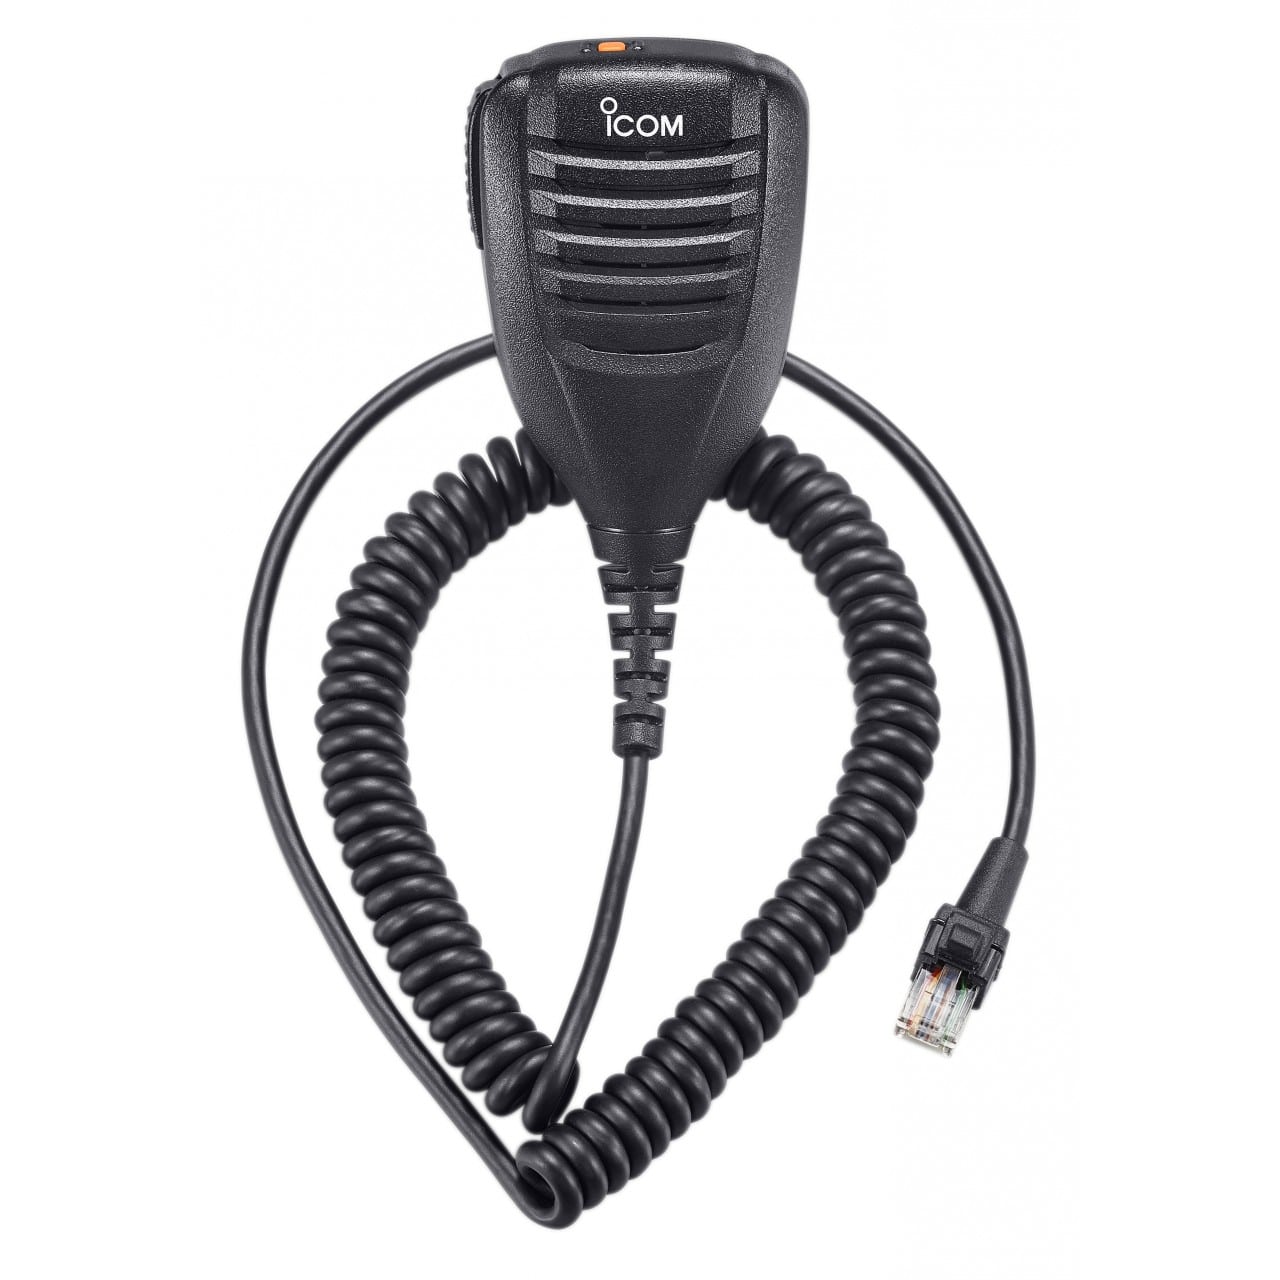 ICOM HM-241 Speaker microphone